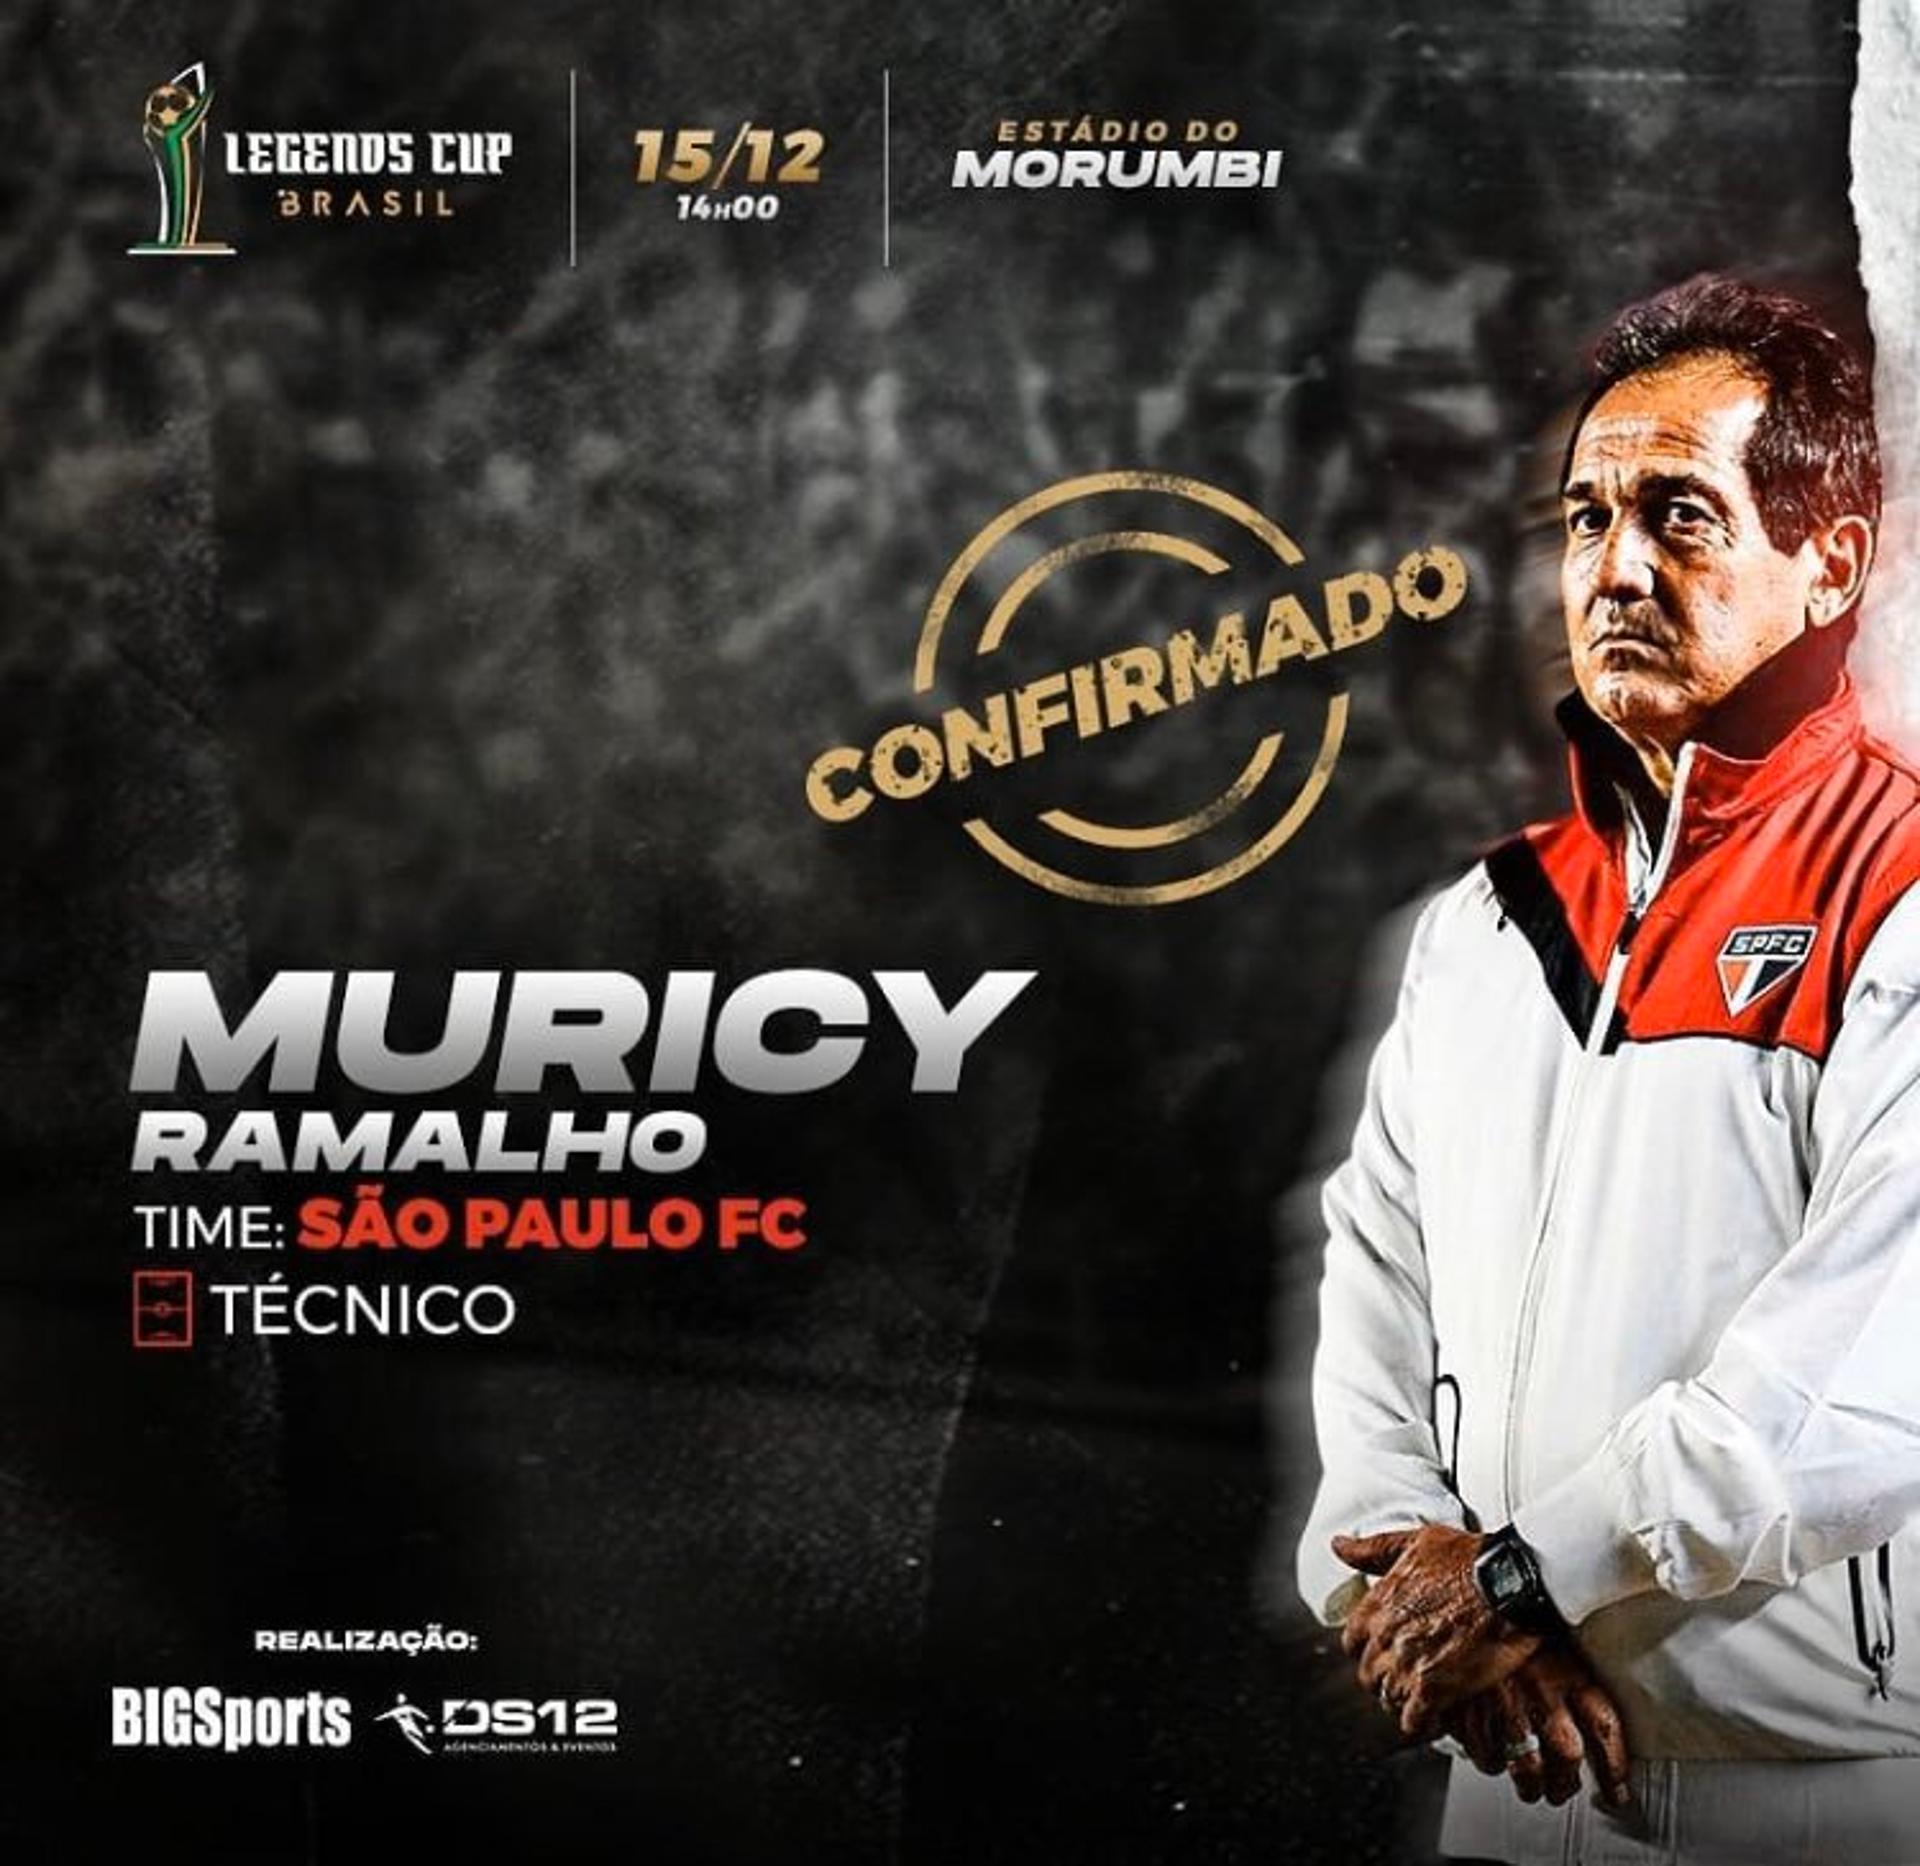 Muricy Ramalho - Legends Cup